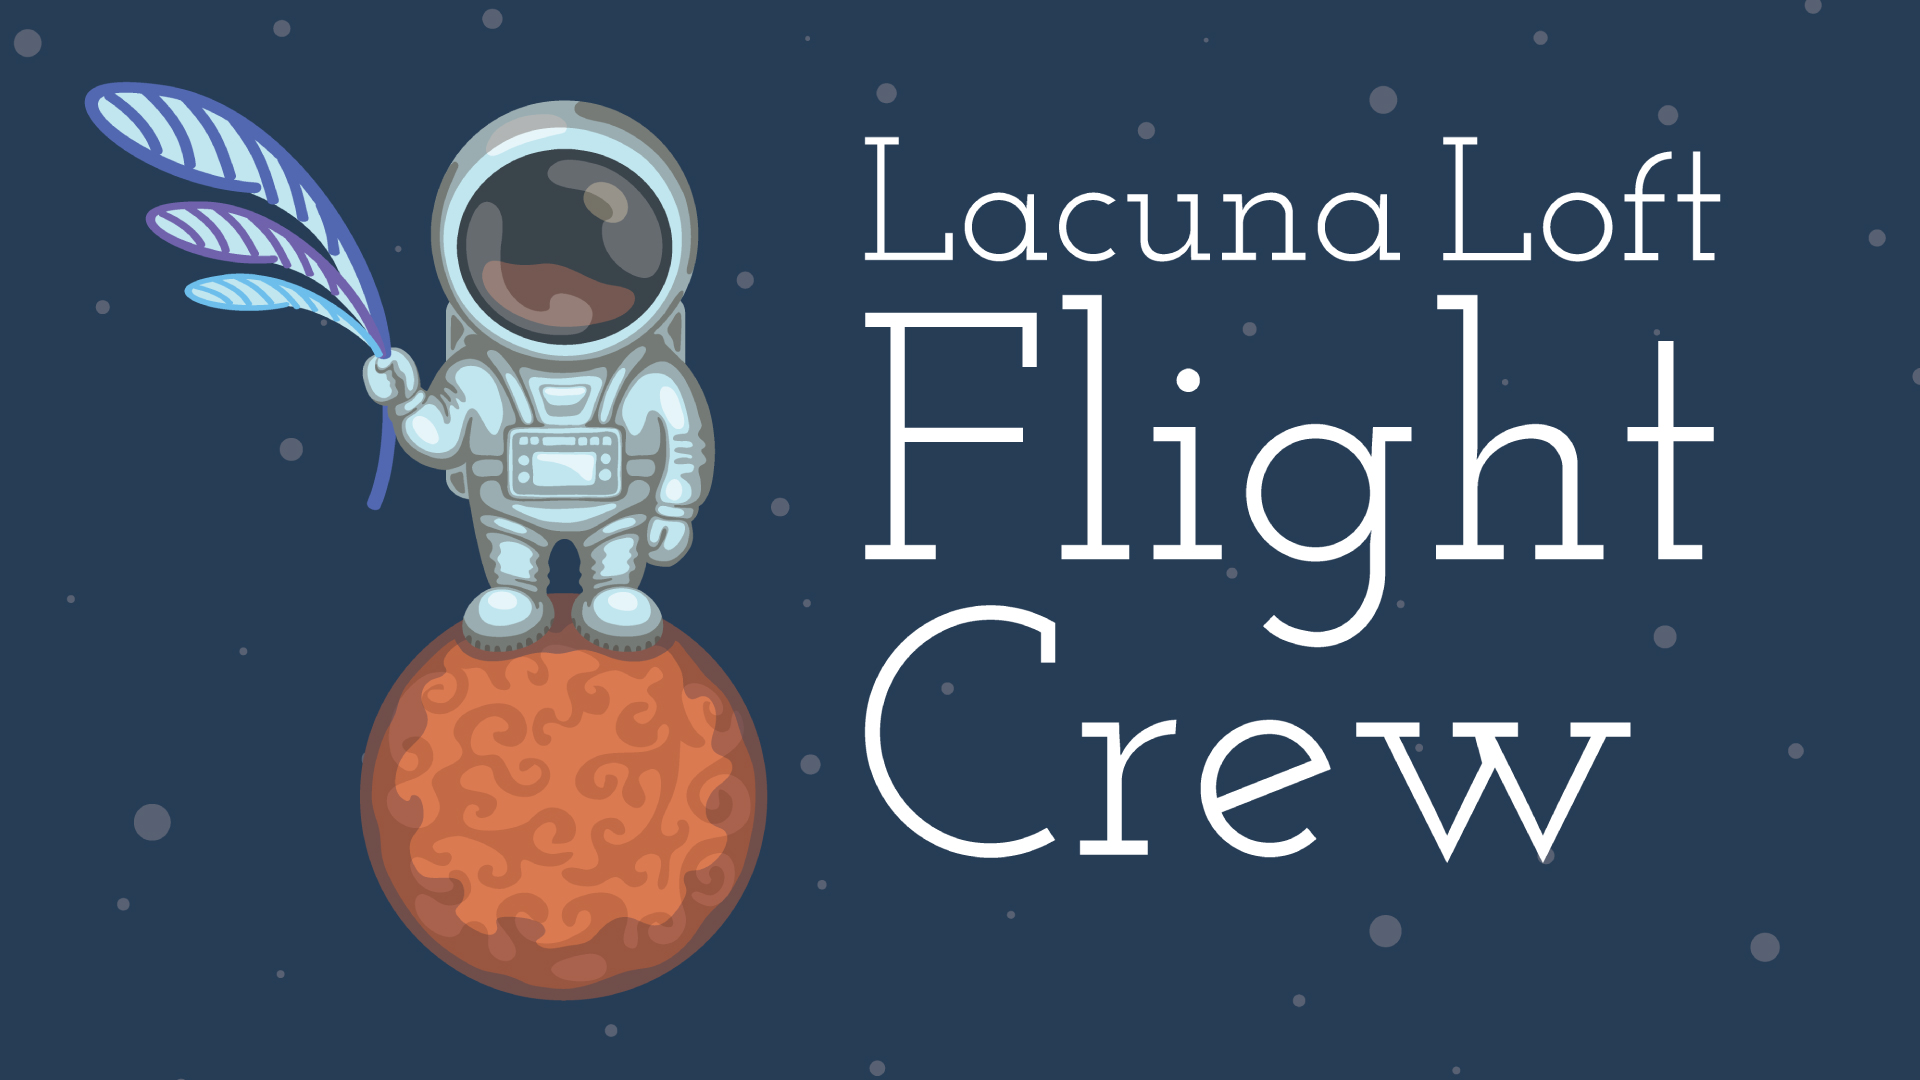 lacuna loft flight crew